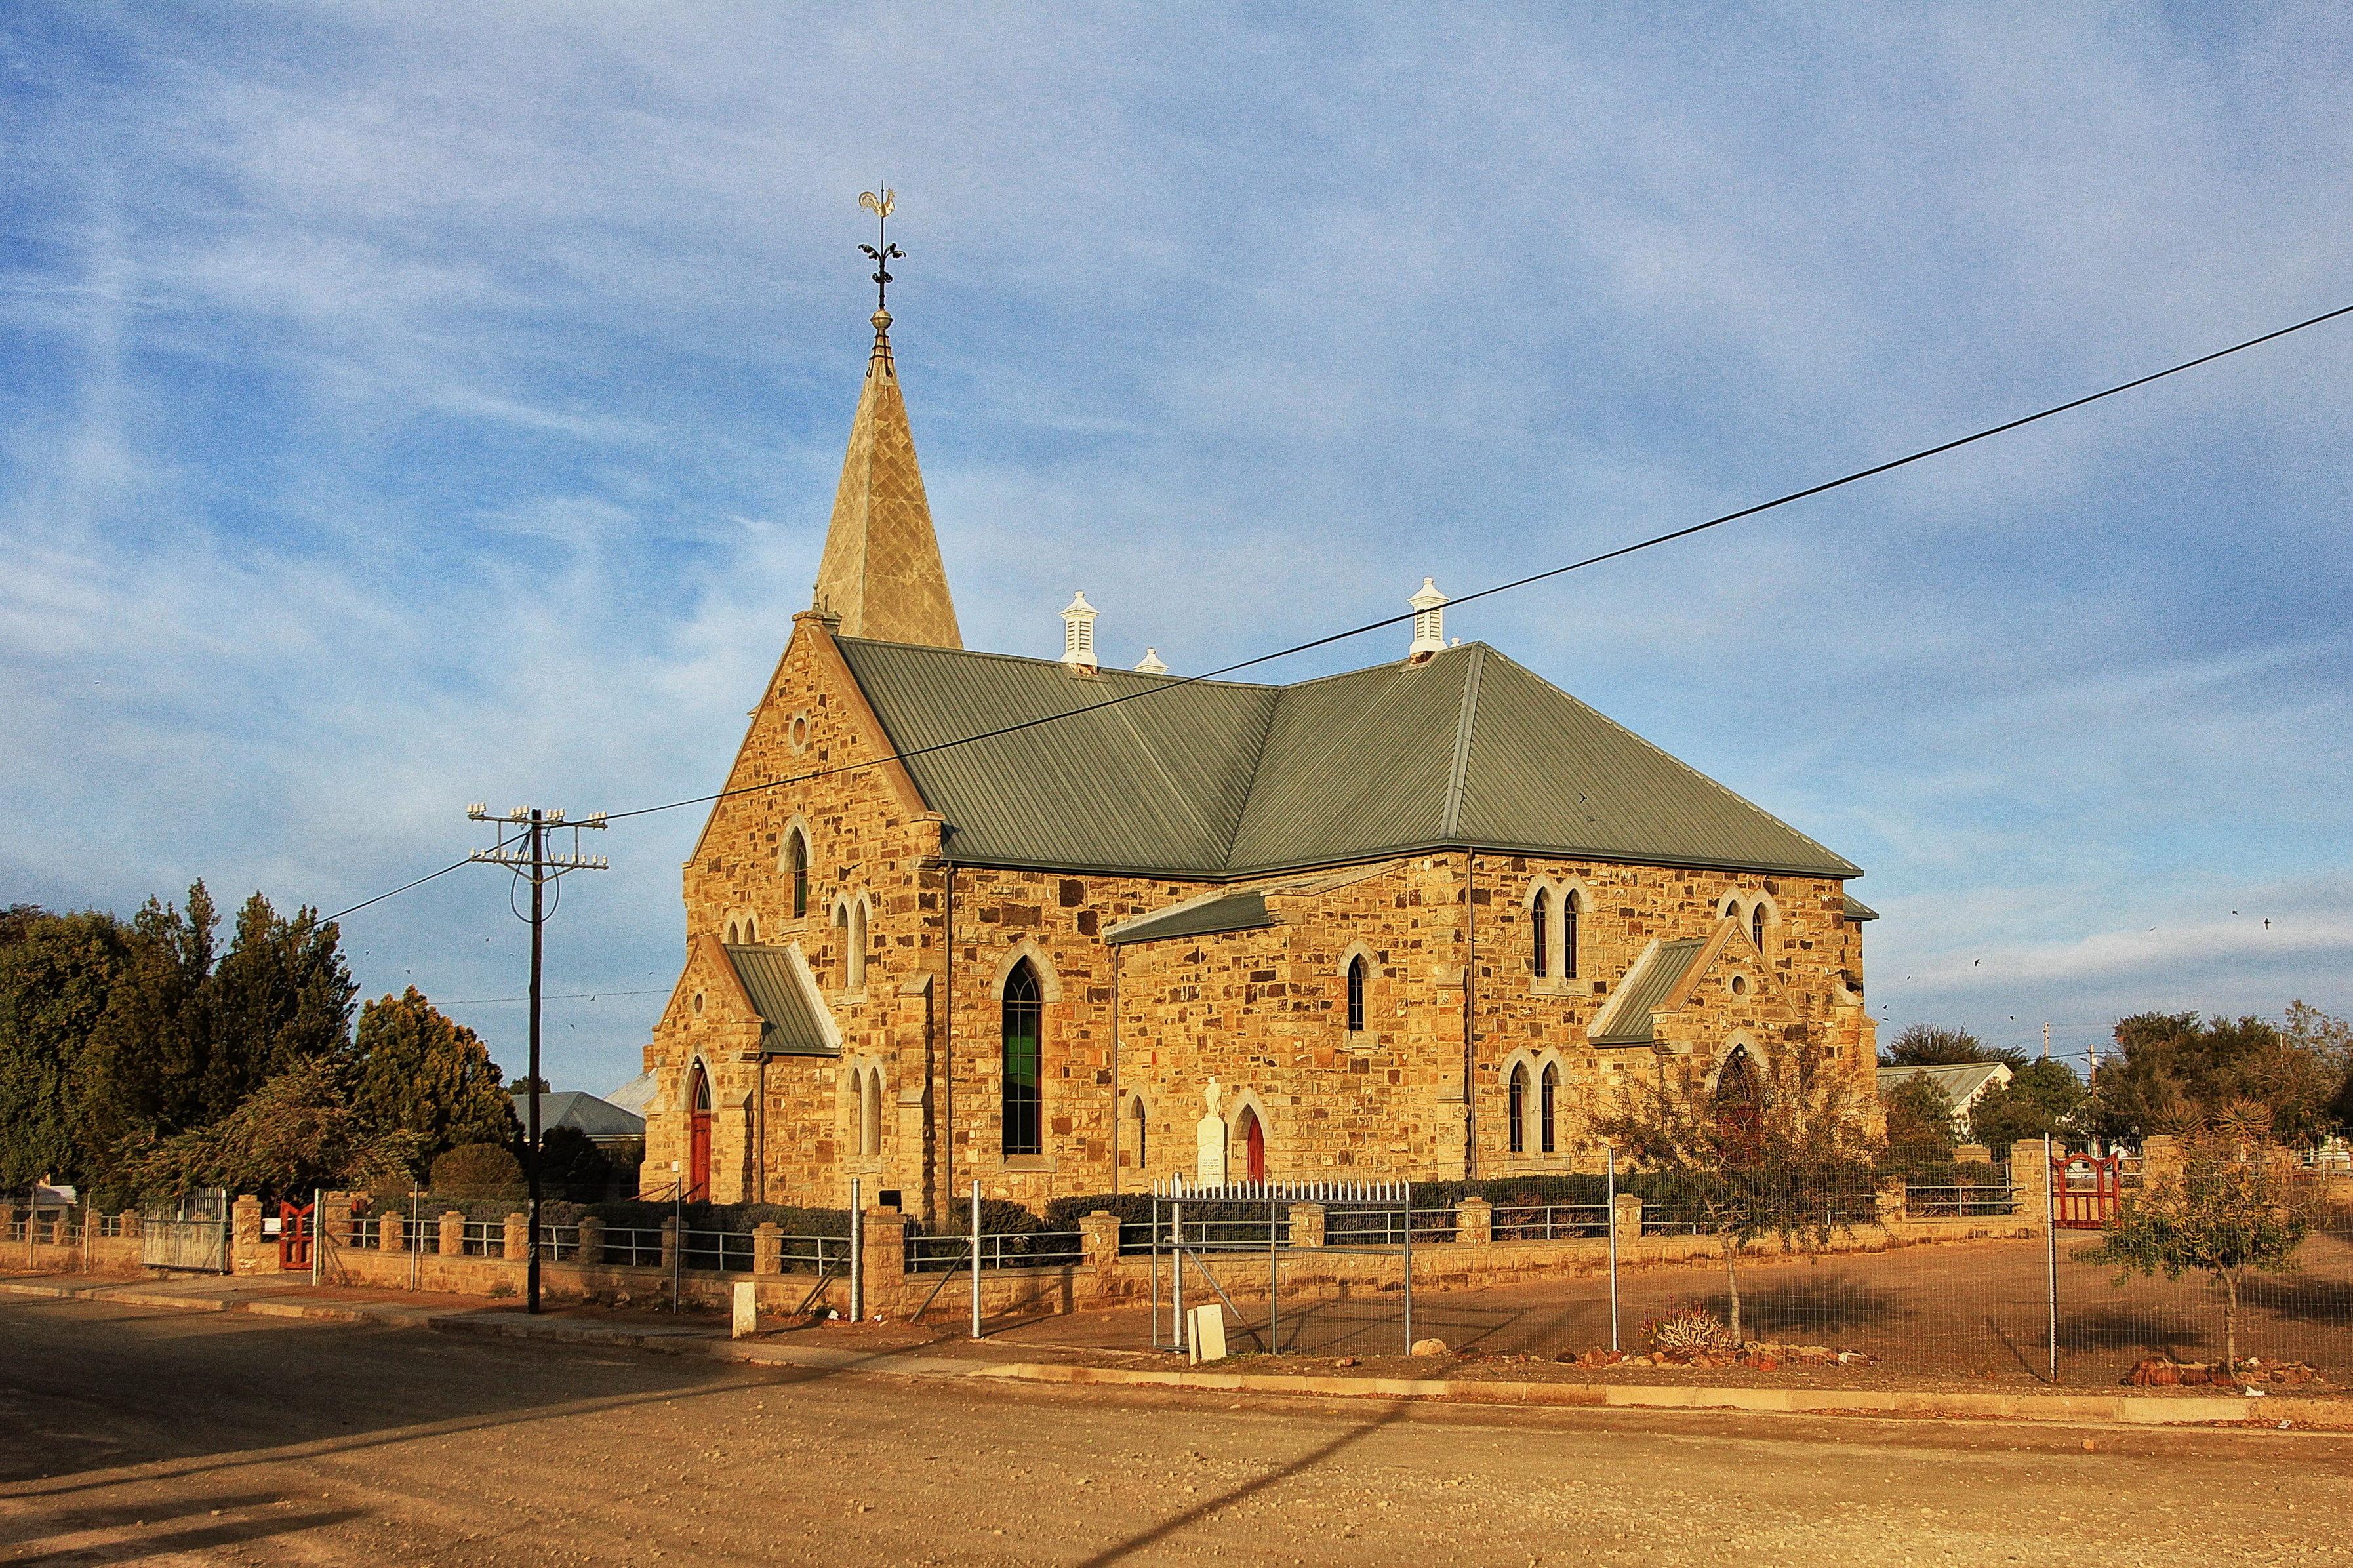 The stately sandstone NG Church in Williston. Williston